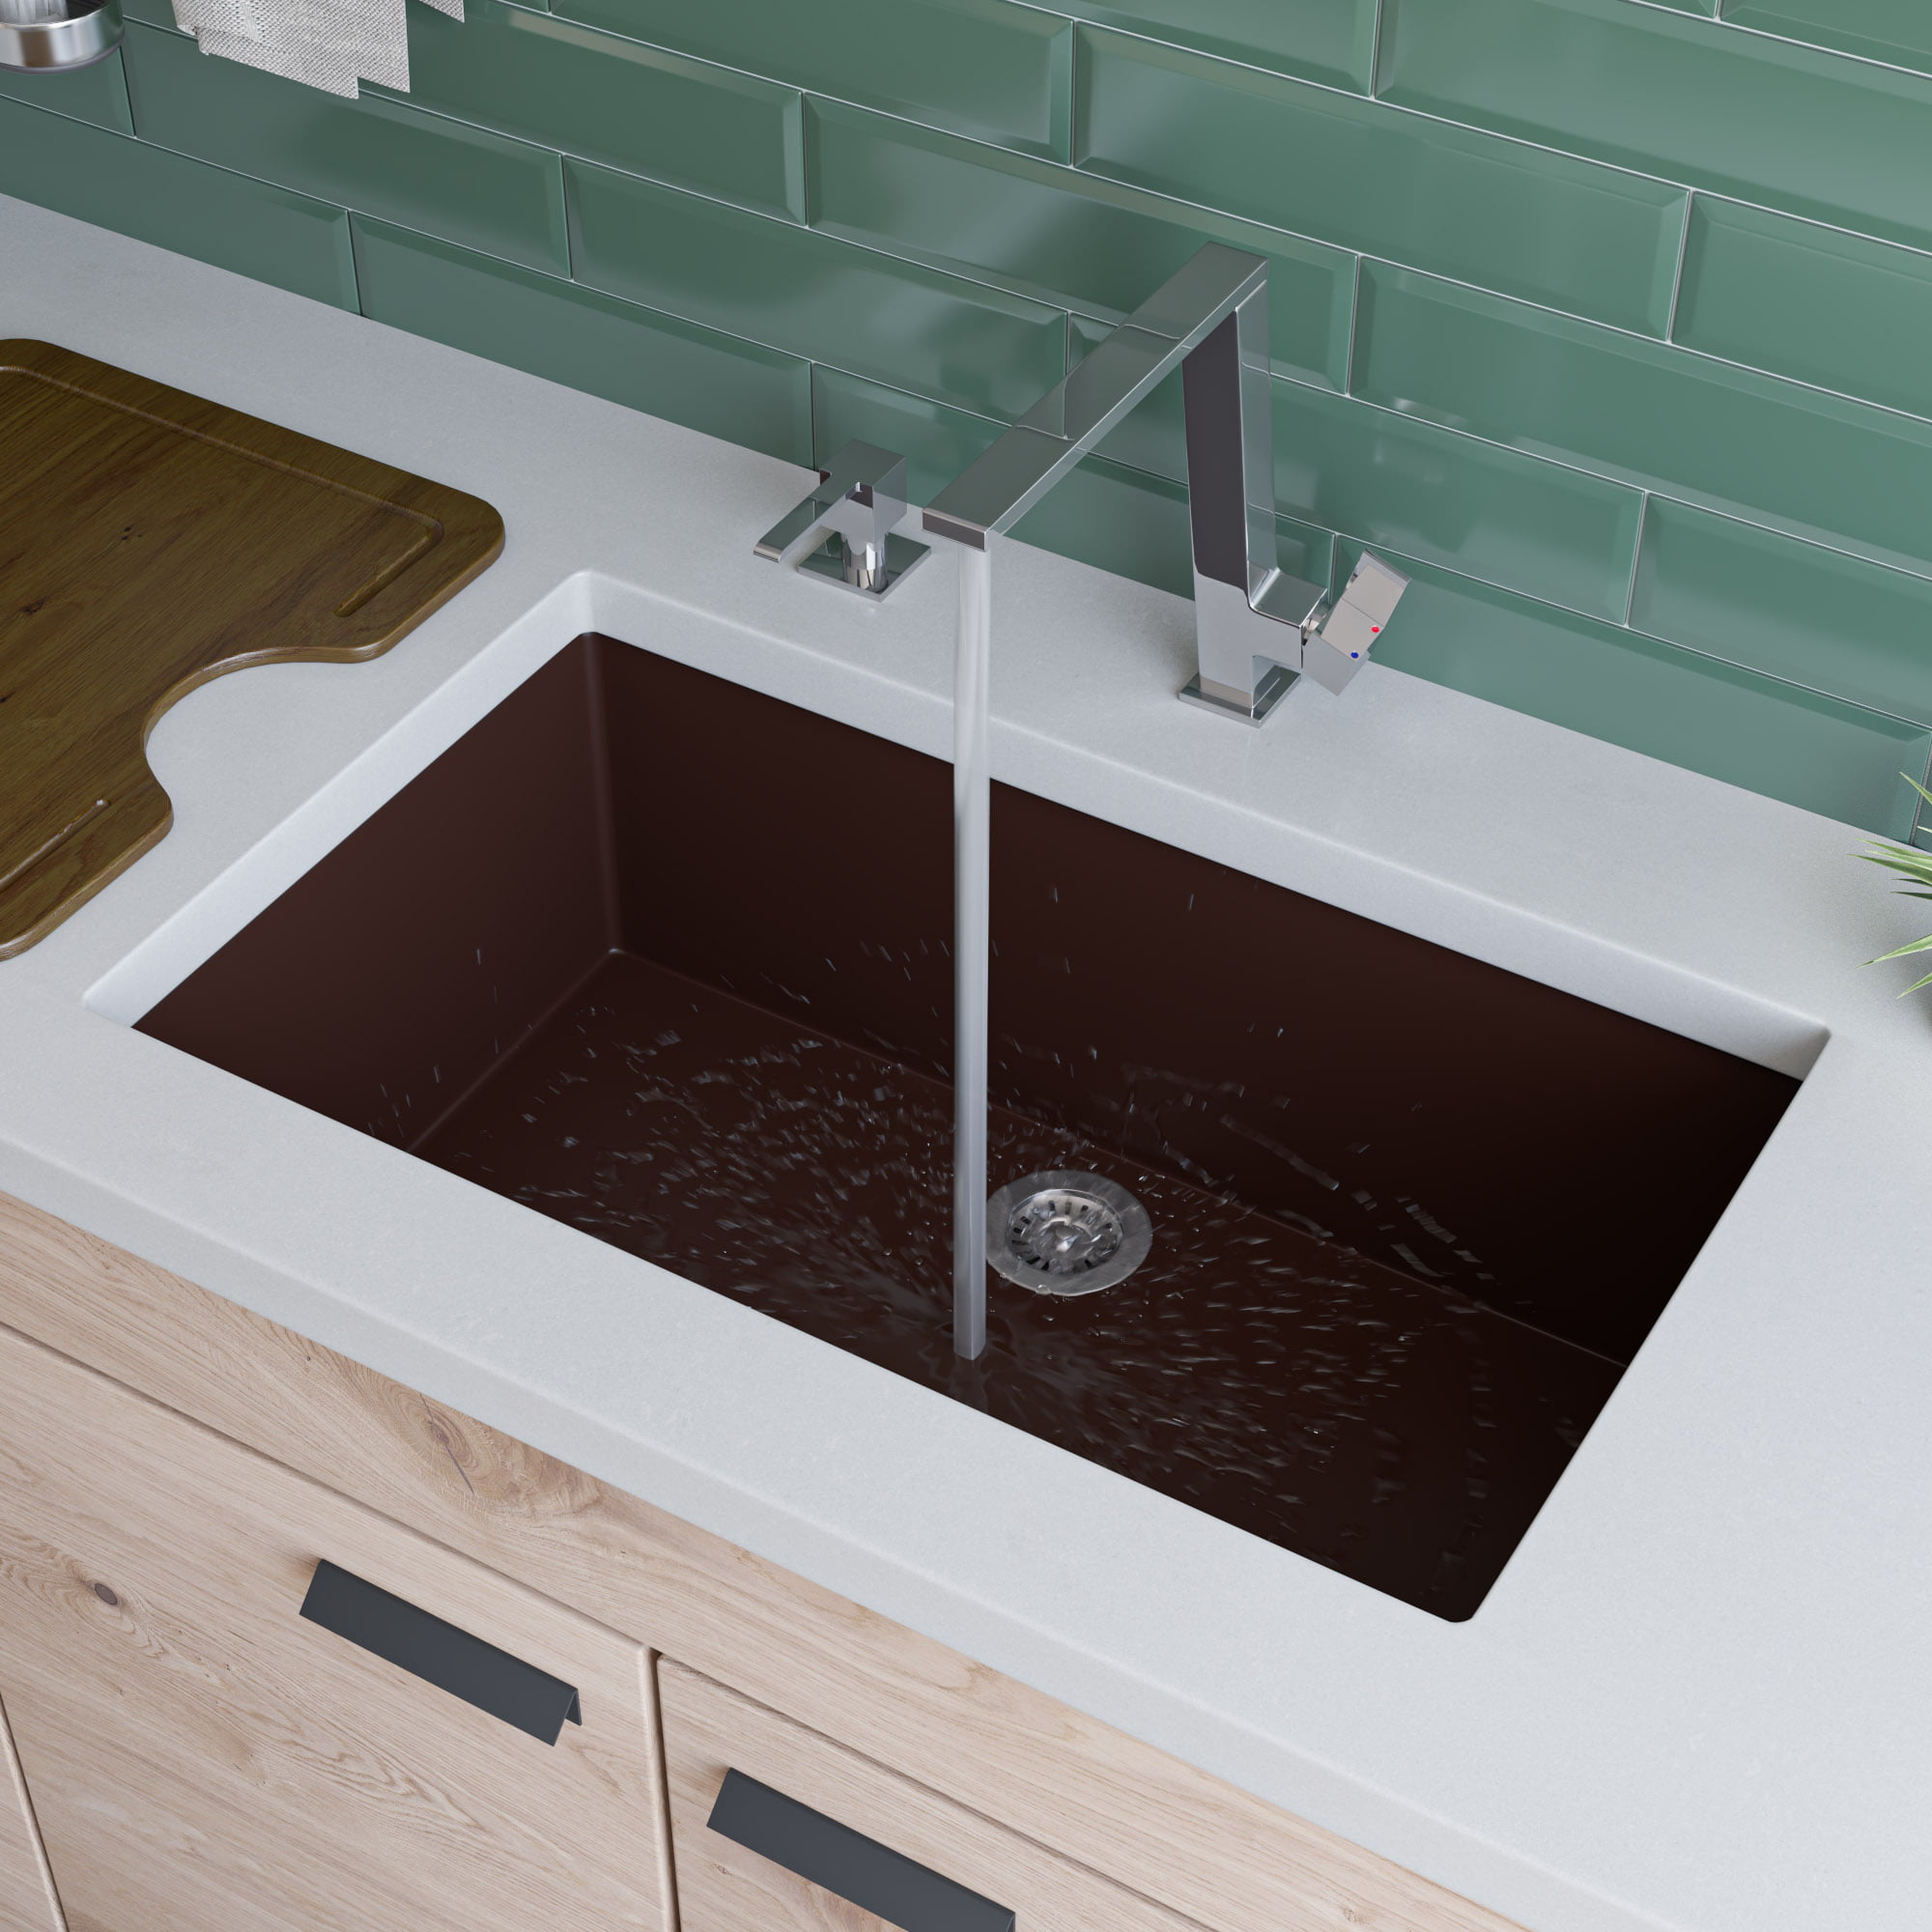 Picture of Alfi Brand AB3020UM-C Undermount Granite Composite 29.88 in. Single Bowl Kitchen Sink in Chocolate